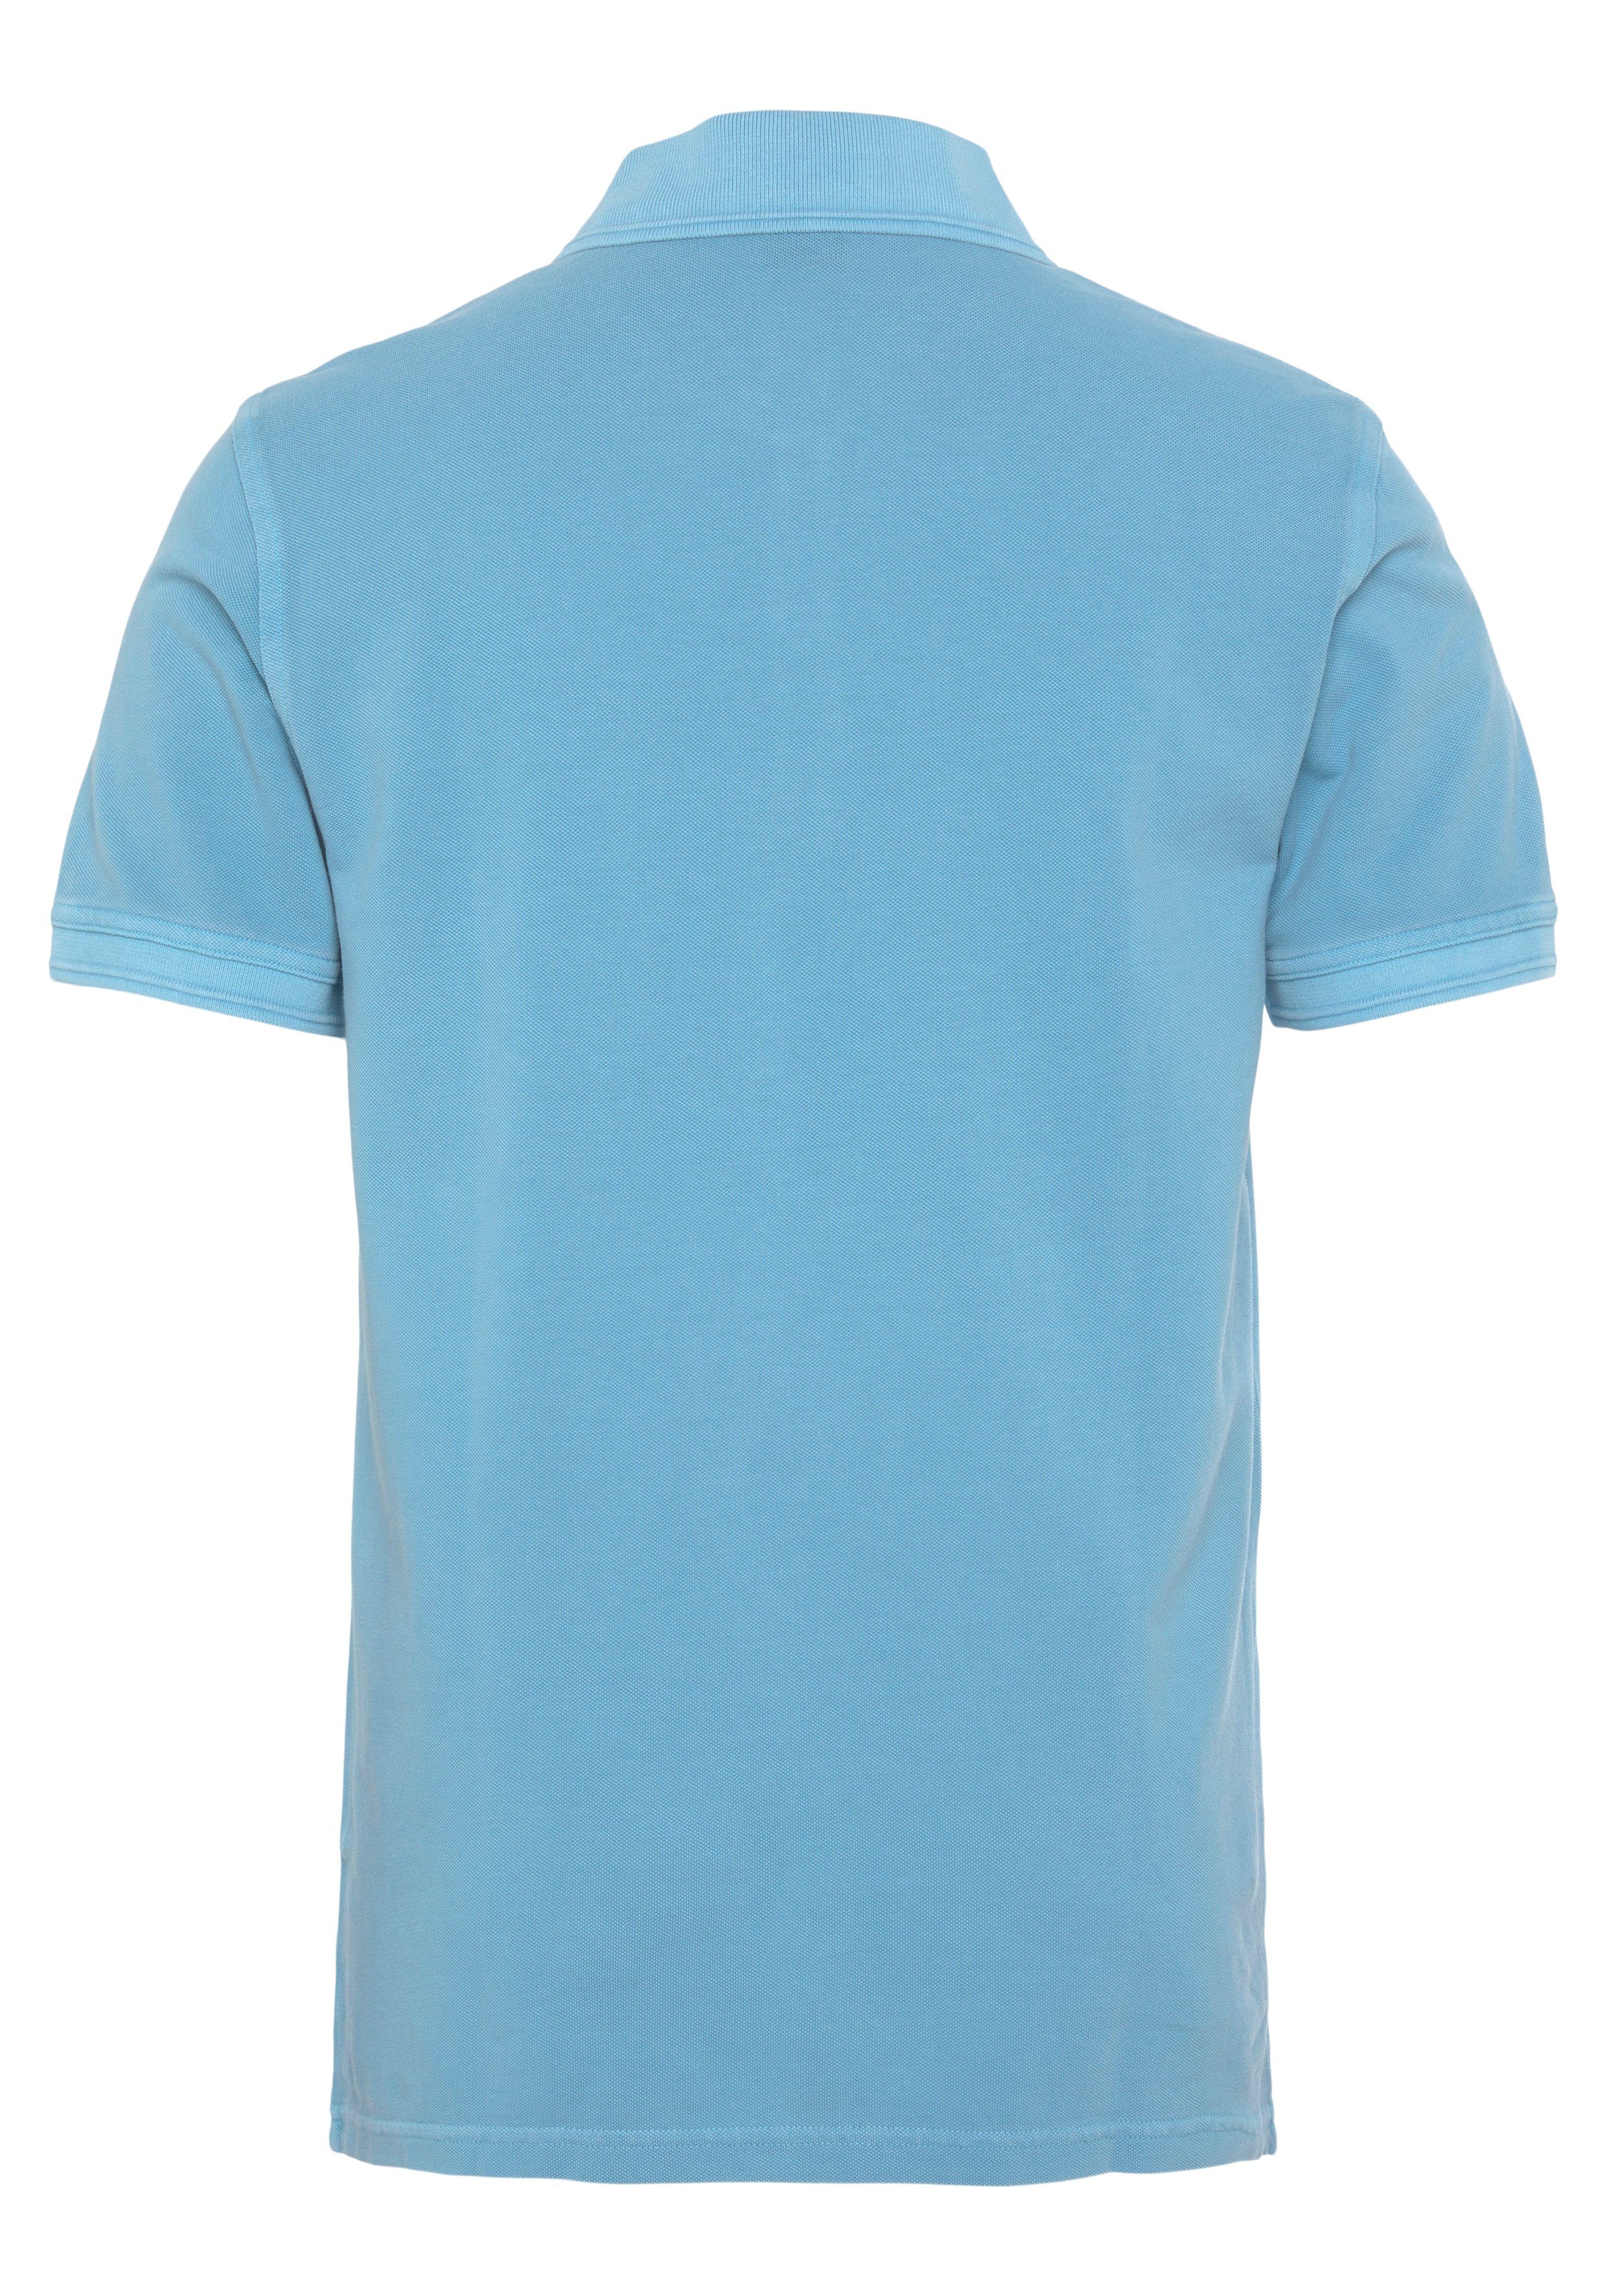 der ORANGE Blue2 01 Brust dezentem Poloshirt Prime auf Open Logoschriftzug BOSS 10203439 mit